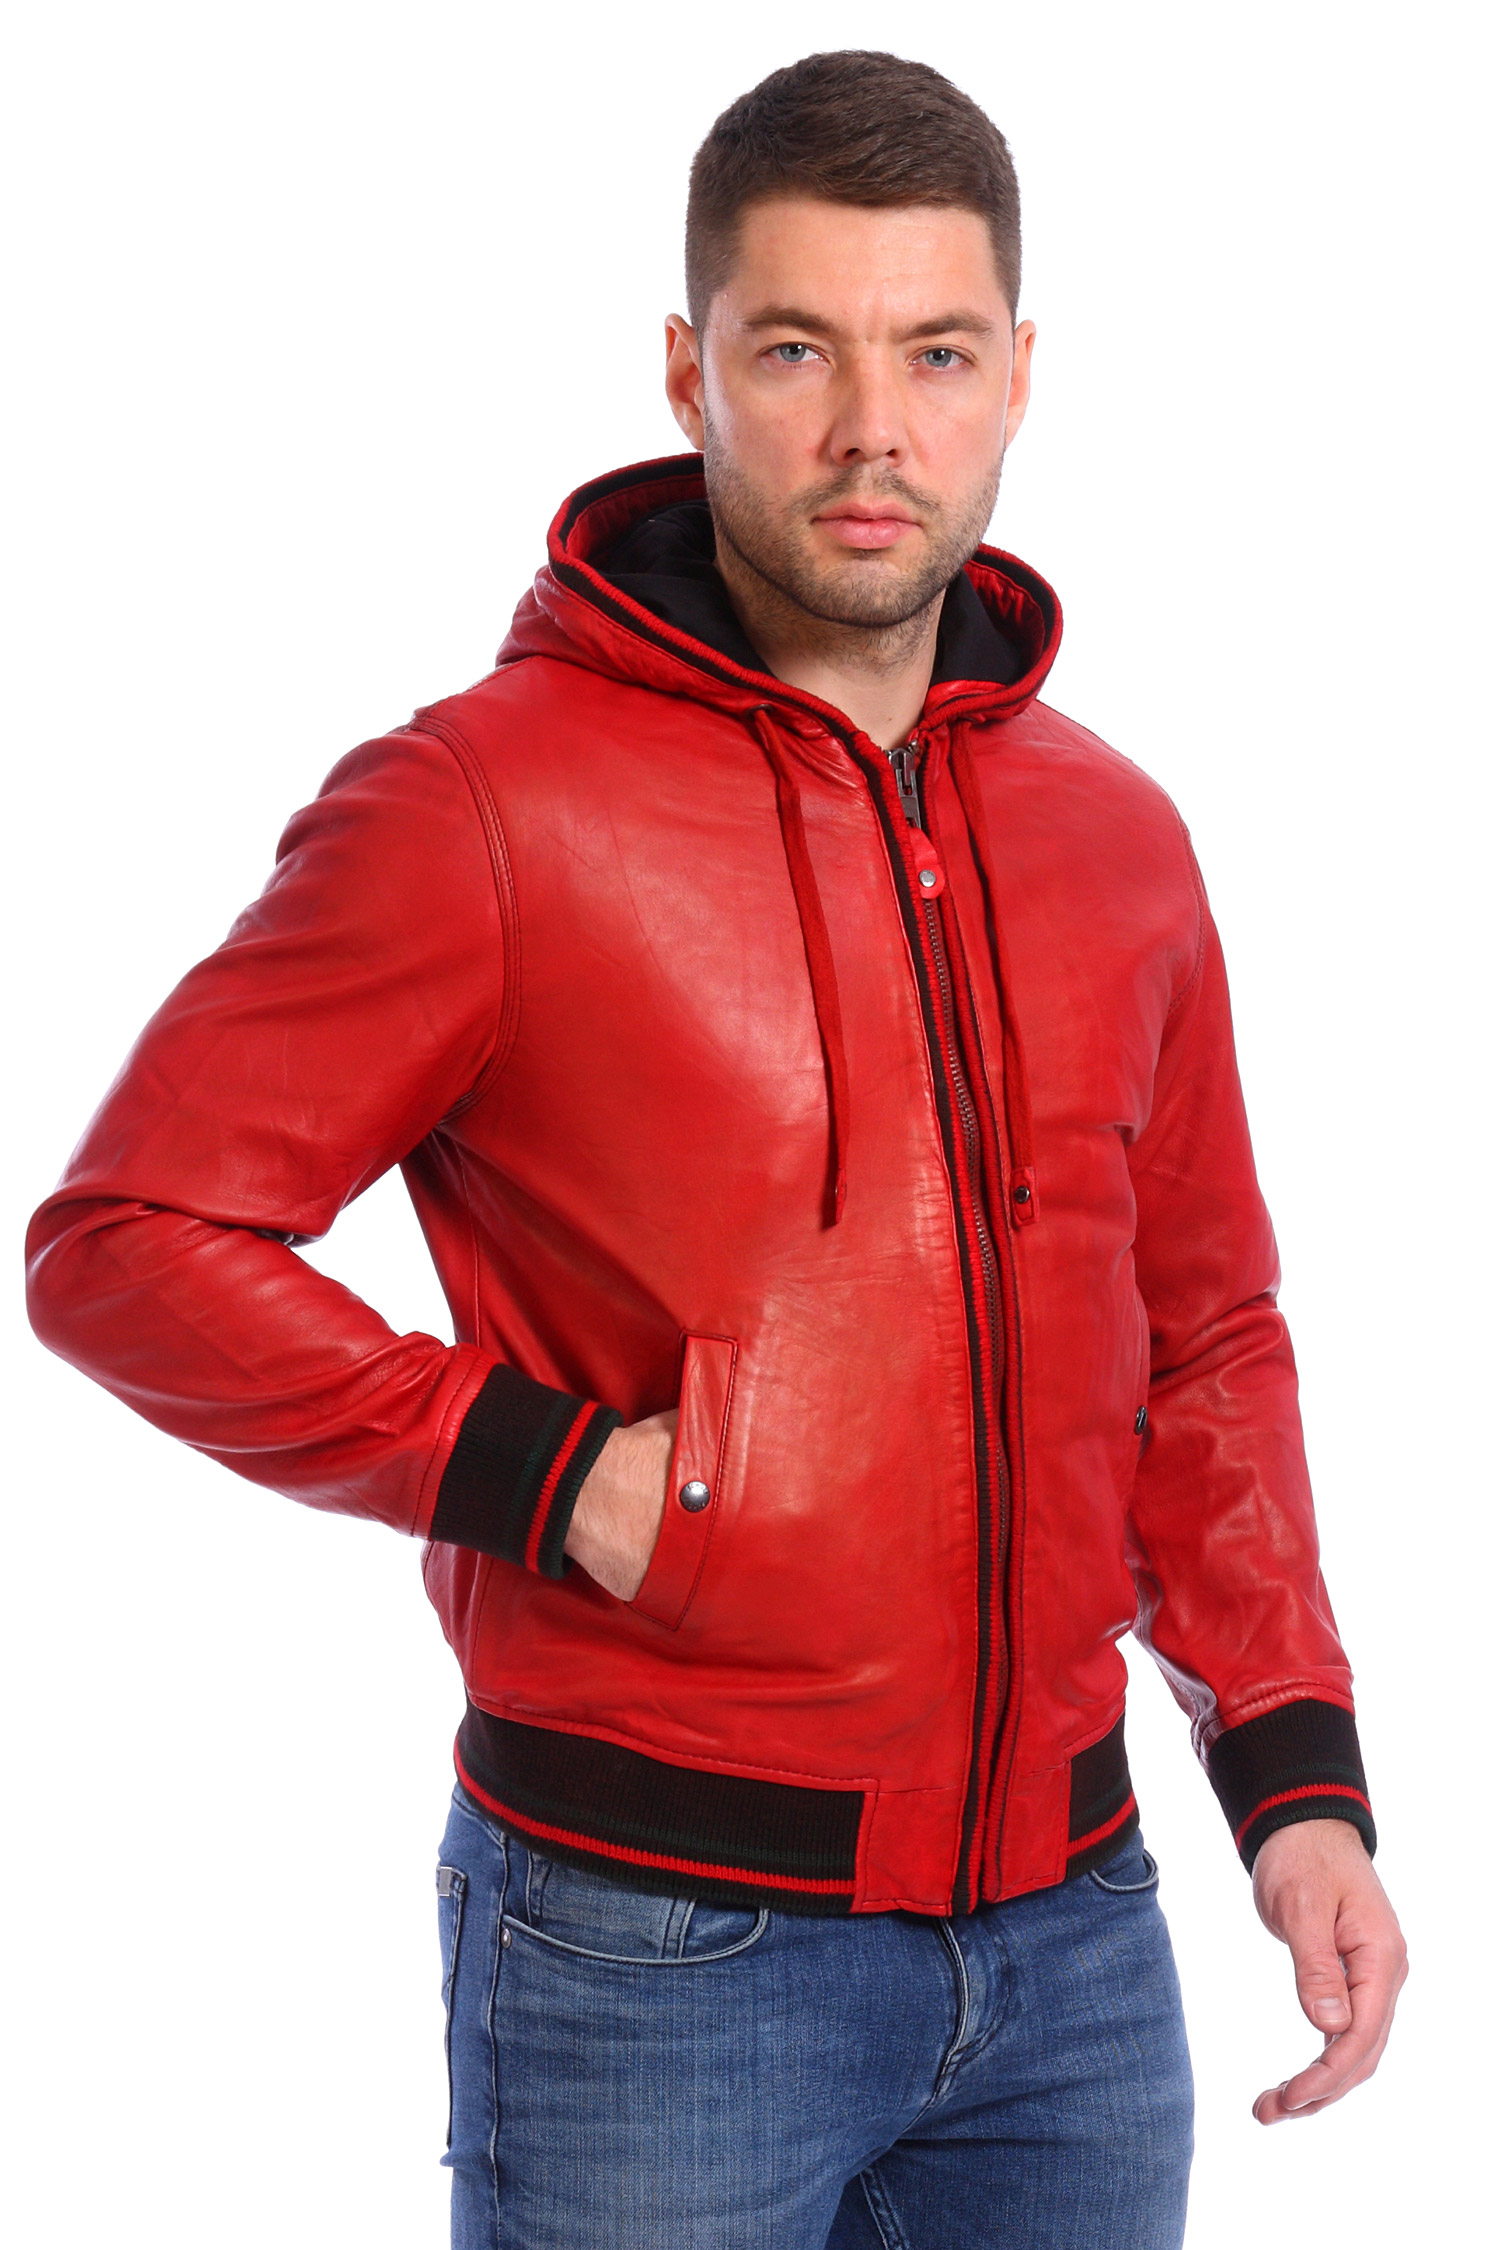 Мужские куртки red. Куртка Jasper мужская красная кожаная. Красная кожаная куртка му. Красная кожанка мужская. Куртка красная с капюшоном мужская красная.